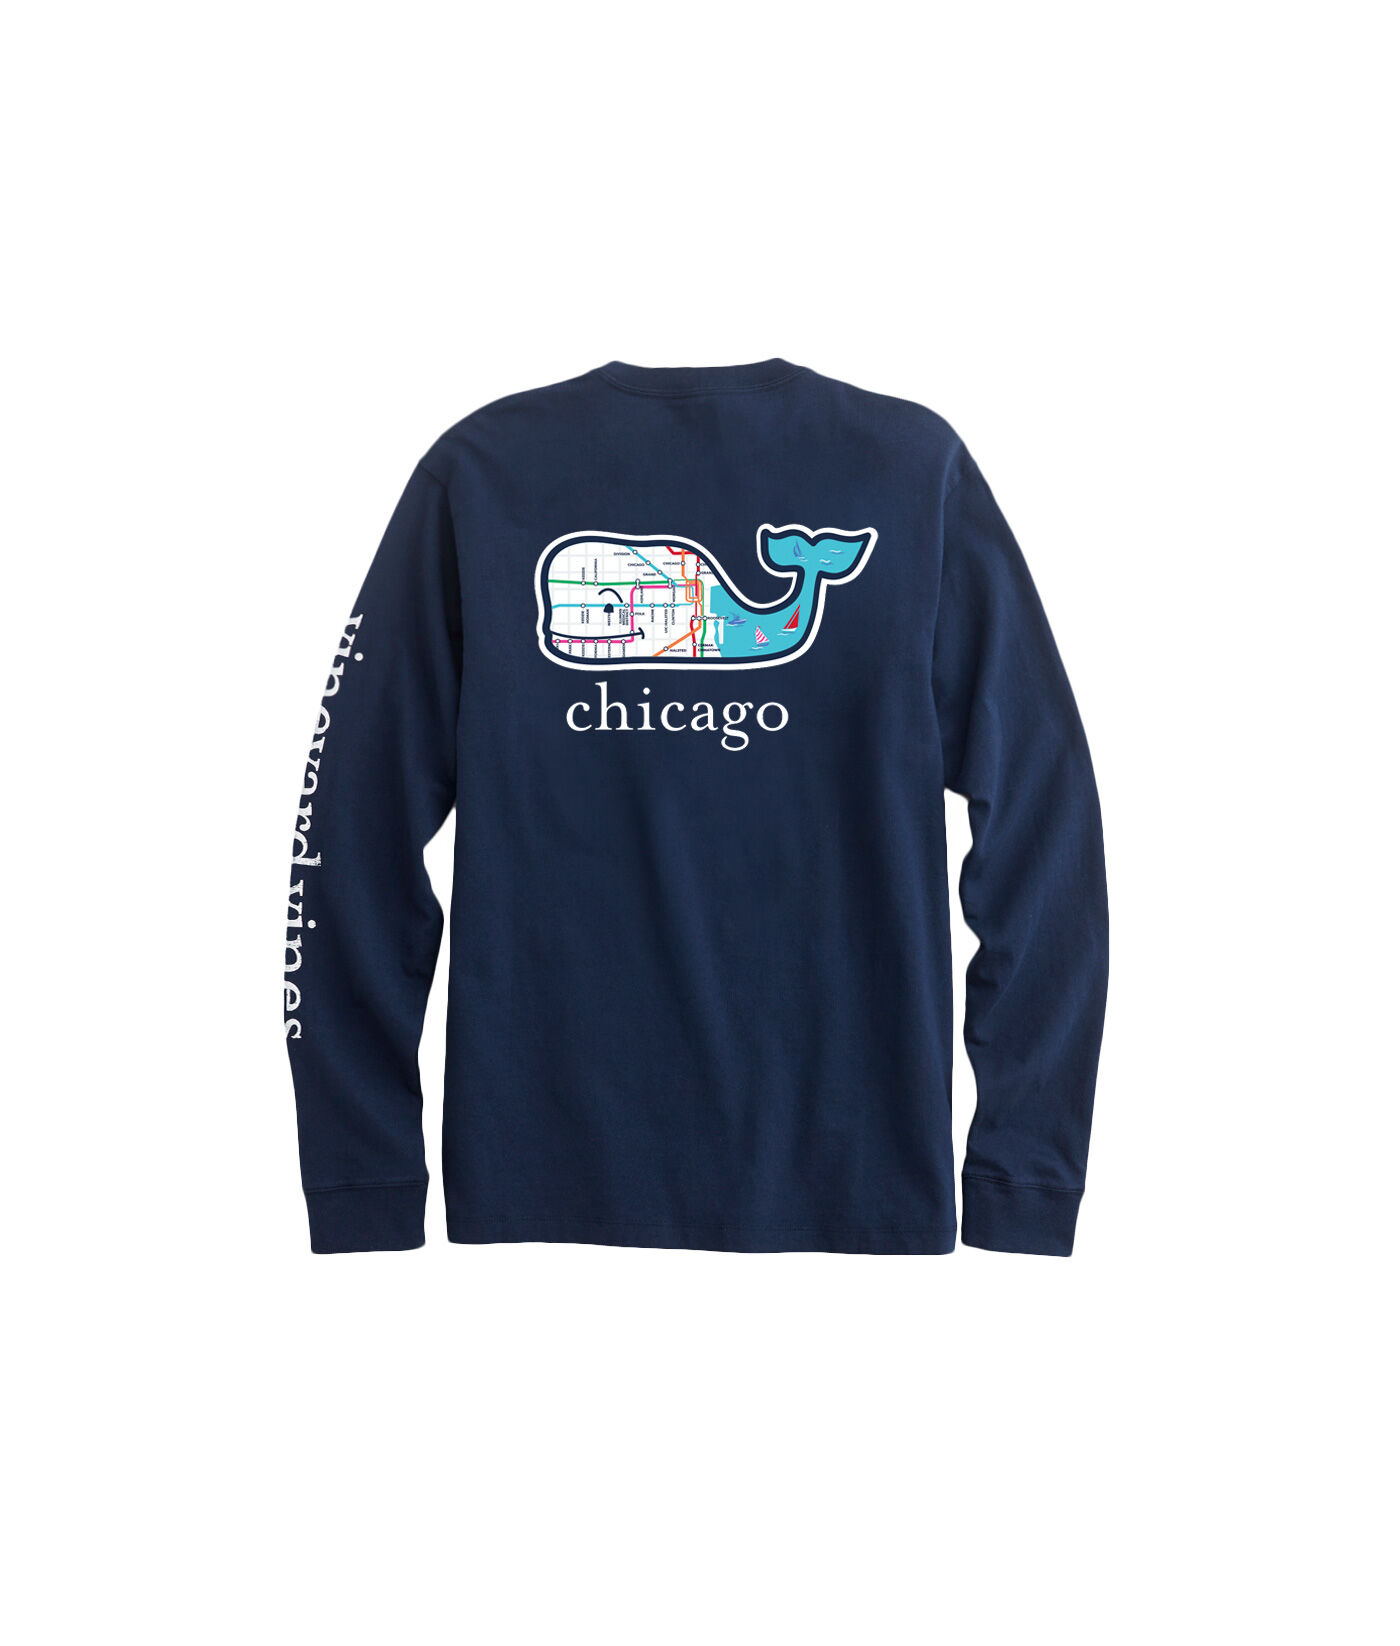 Vineyard Vines Flag Whale CC Prep Long Sleeve Tee Shirt in Blue Blazer M / Blue